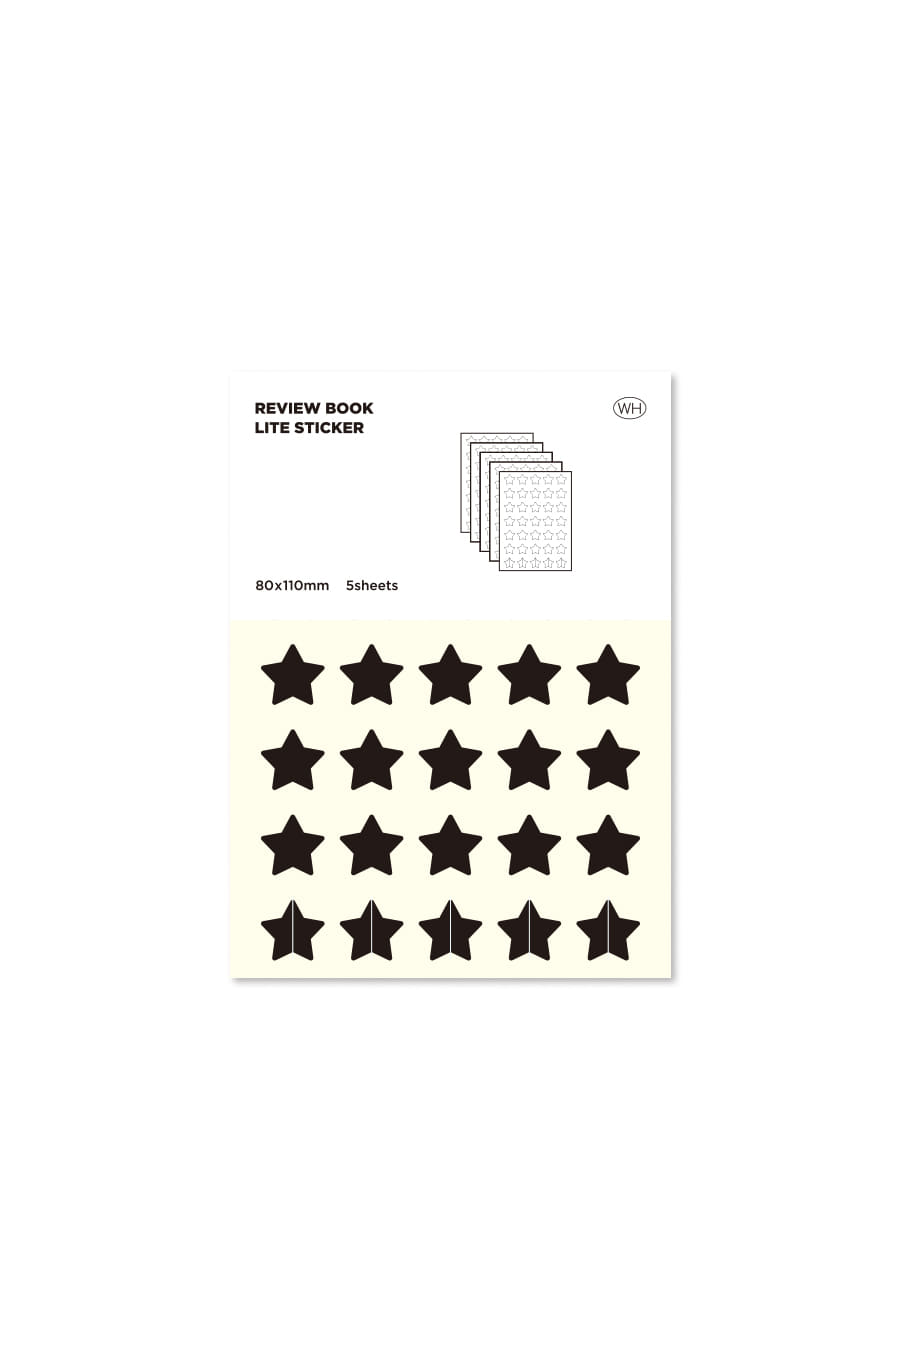 Review Book lite_sticker